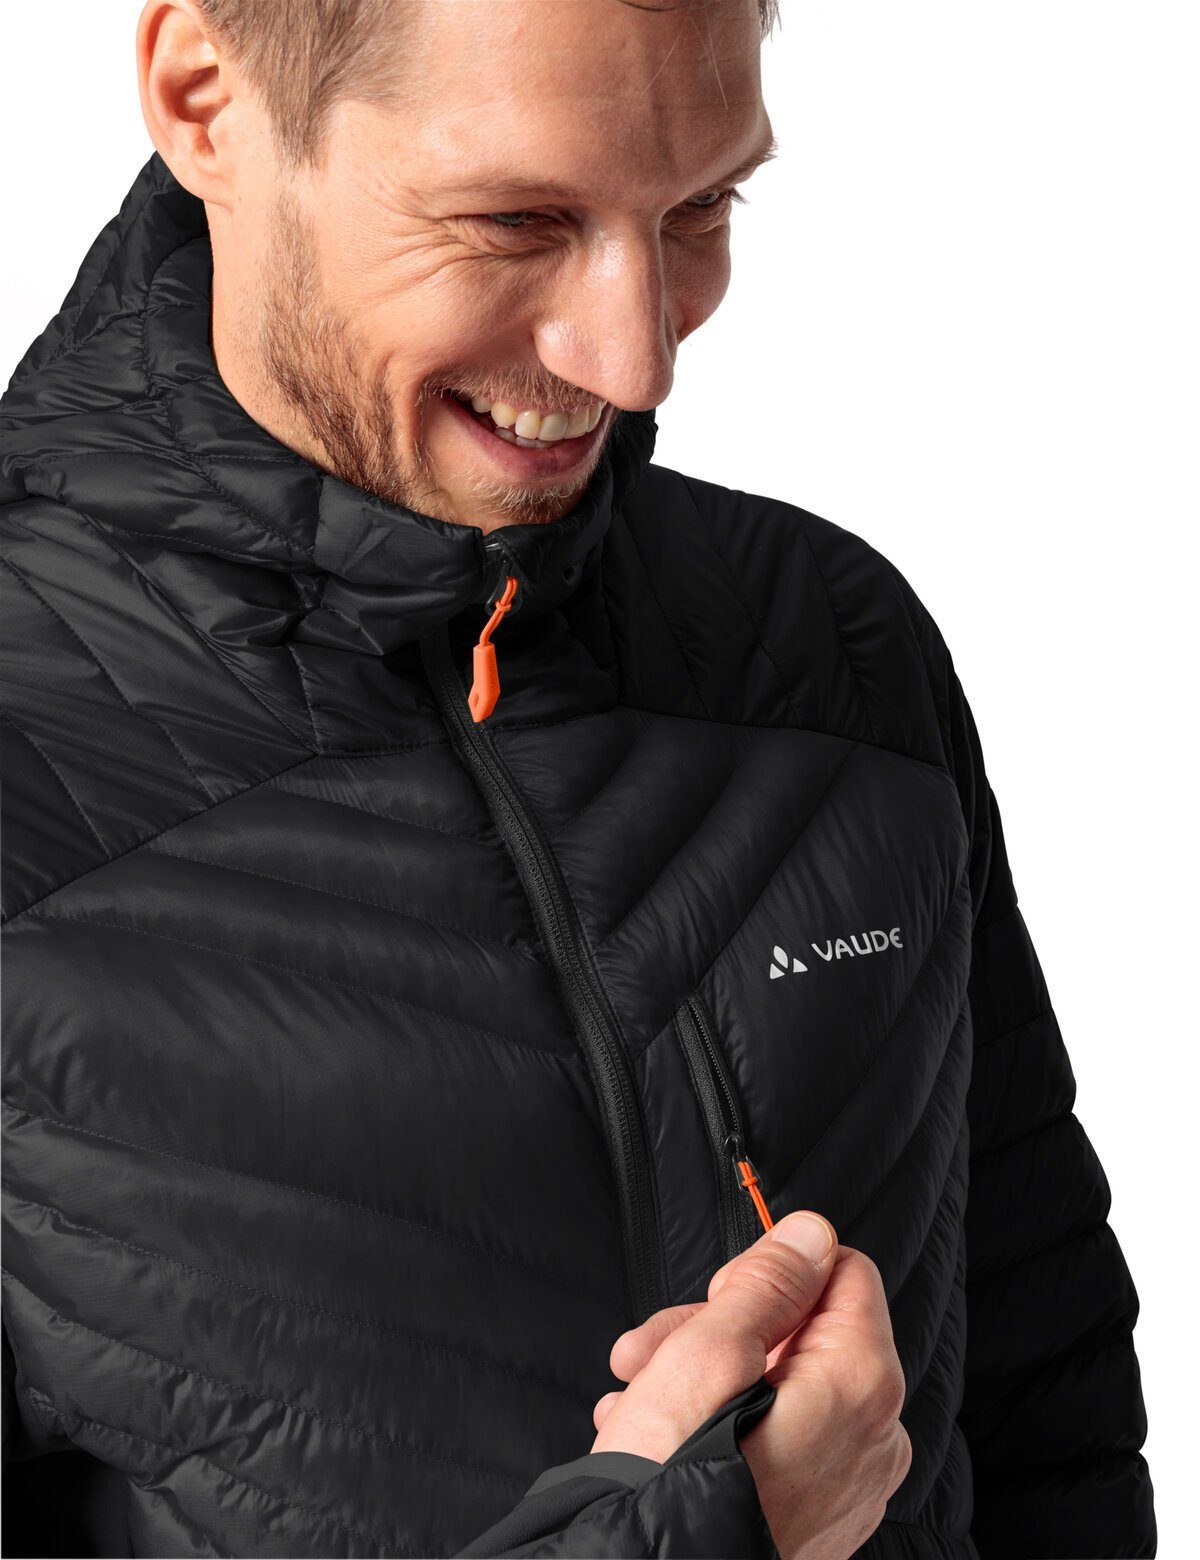 (1-St) Pro Sesvenna black kompensiert Klimaneutral Men's Jacket Outdoorjacke VAUDE II